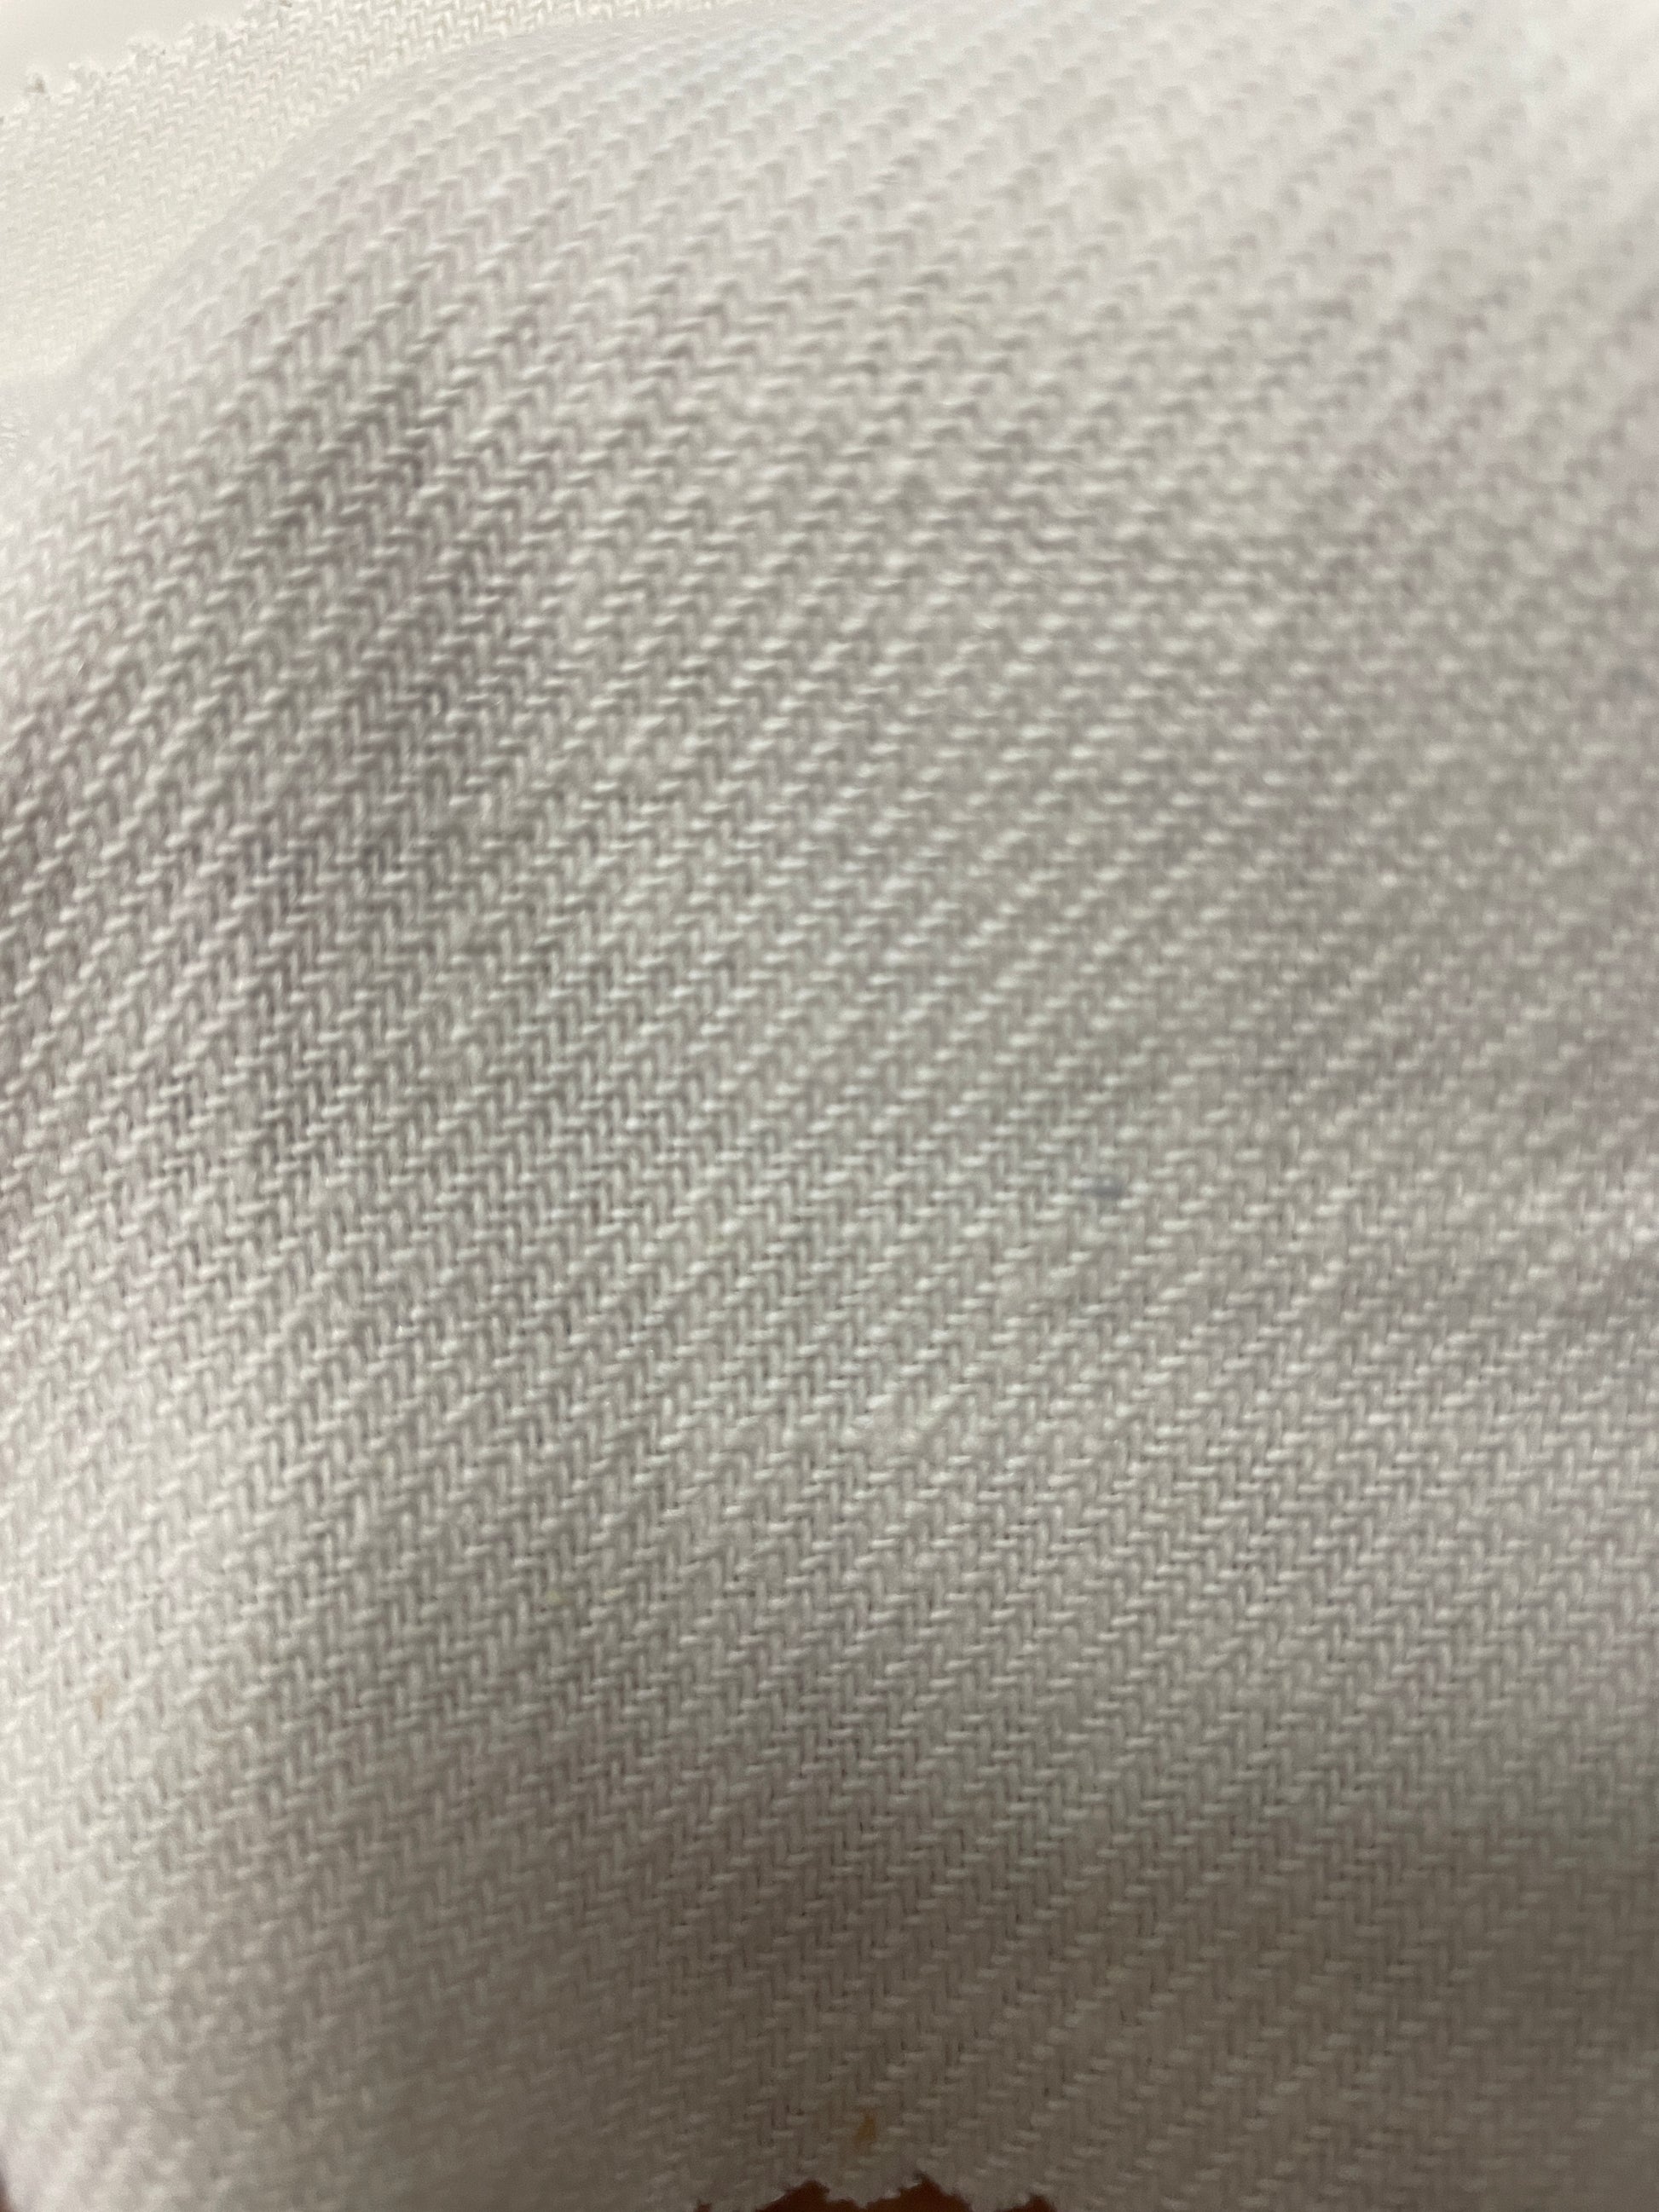 250g Textured Linen Cotton Blended Fabric - Natasha Fabric